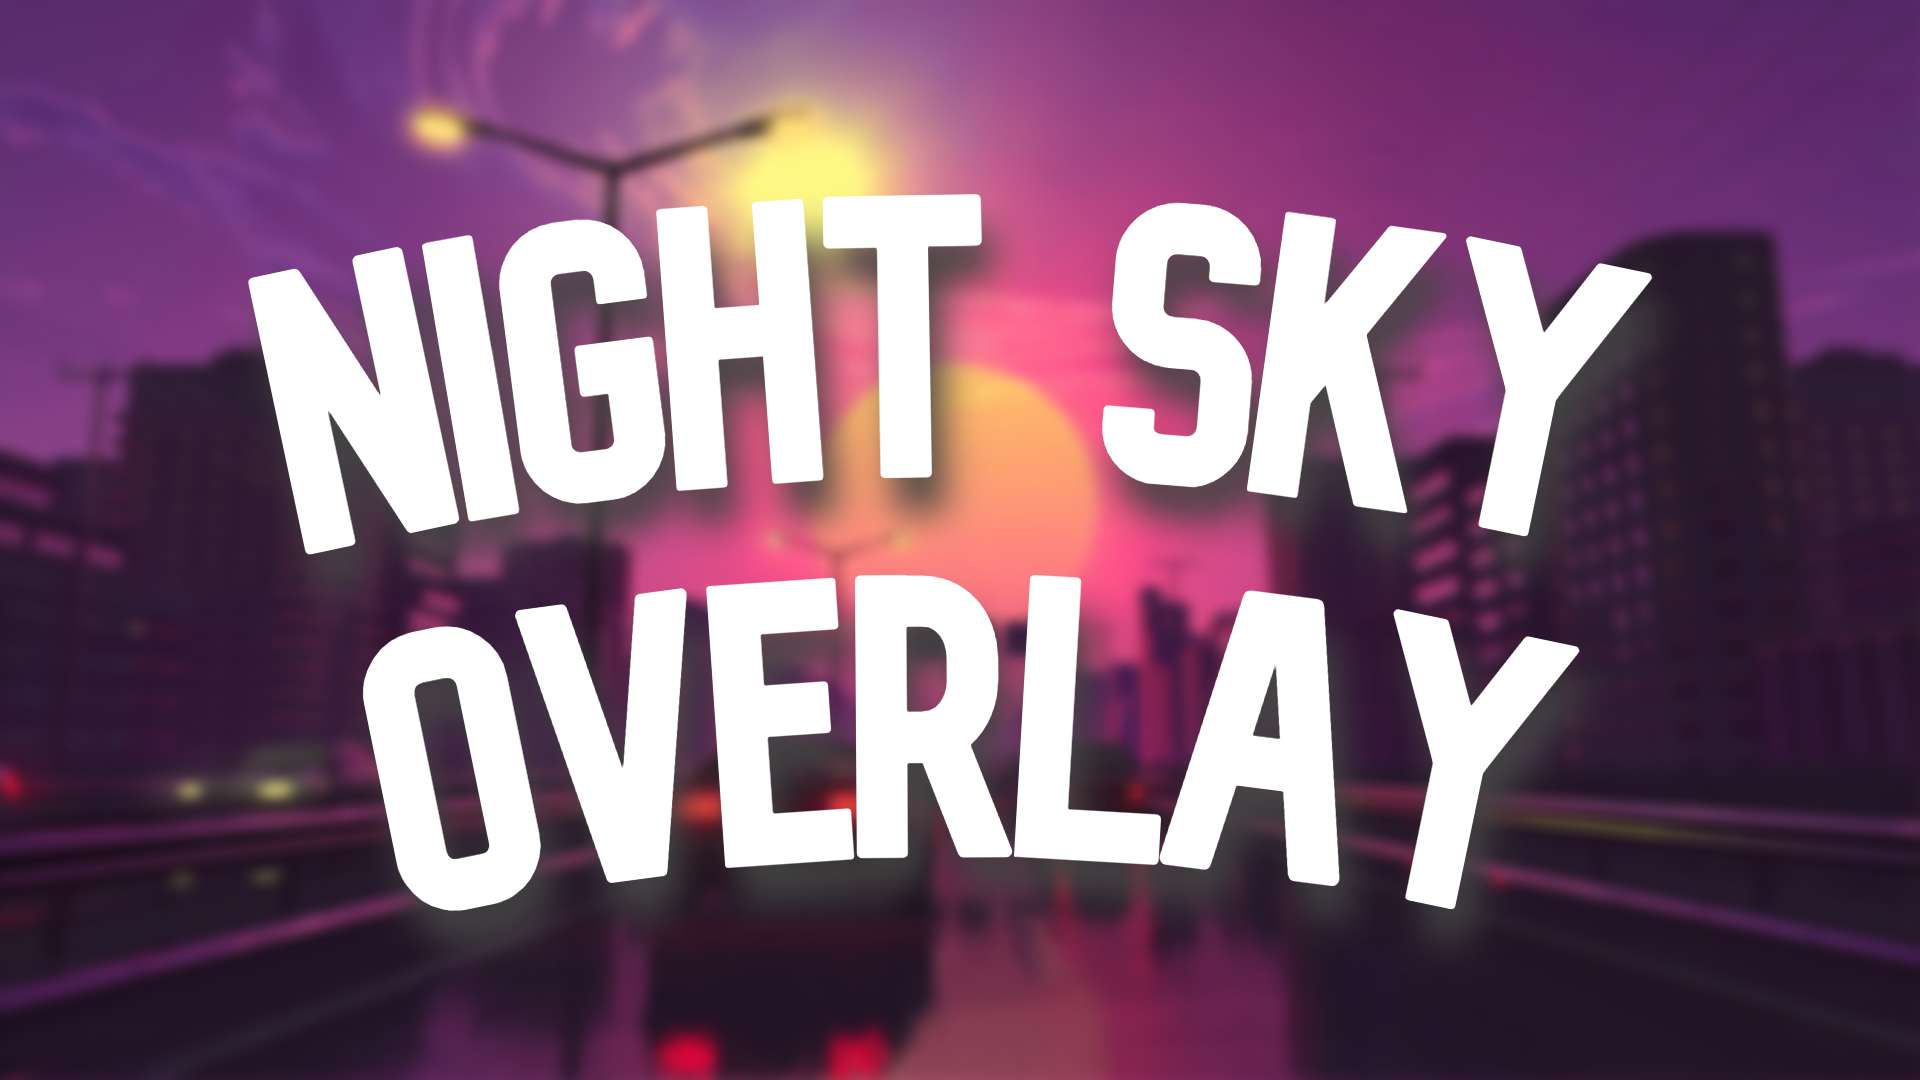 Night Sky Overlay #9 16x by rh56 on PvPRP